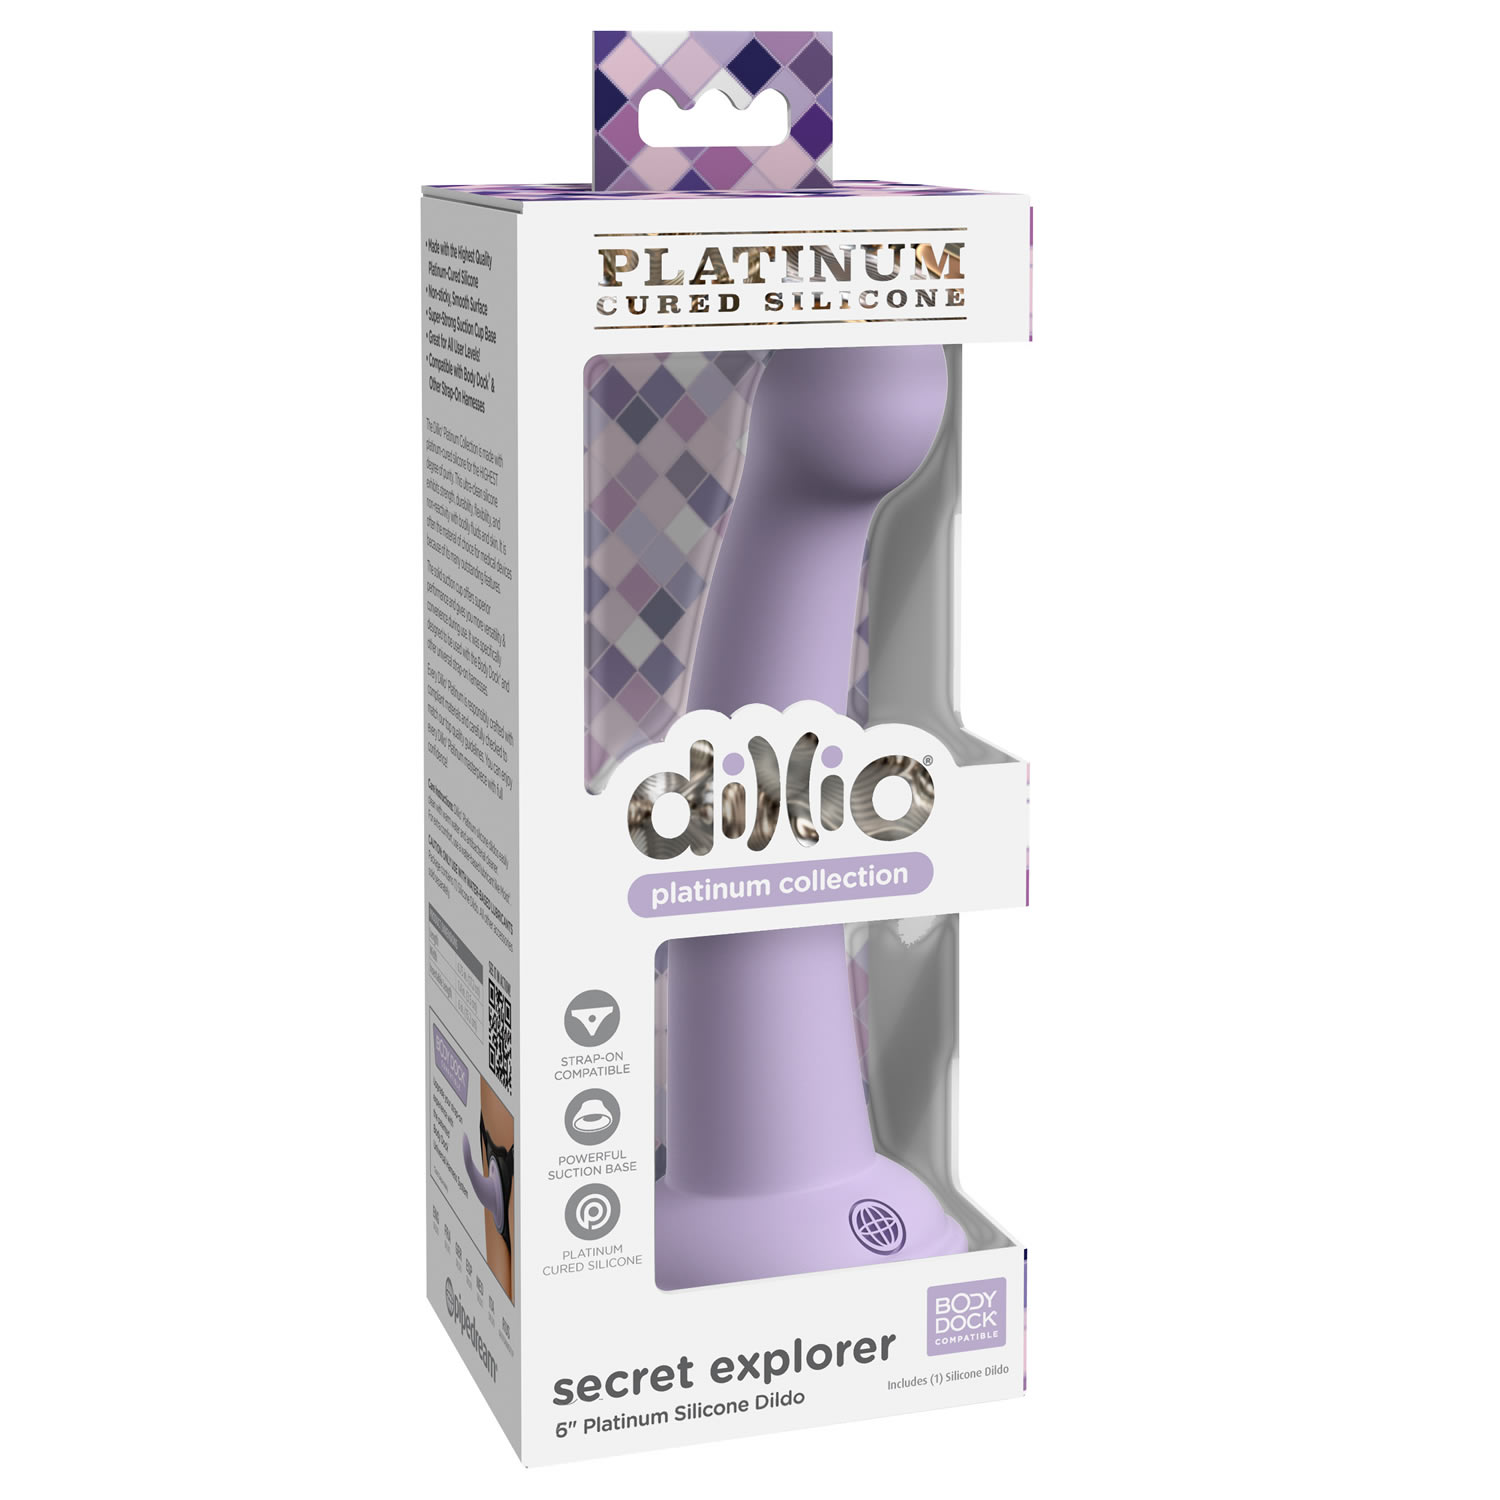 Dillio Platinum Secret Explorer Dildo with Suction Base